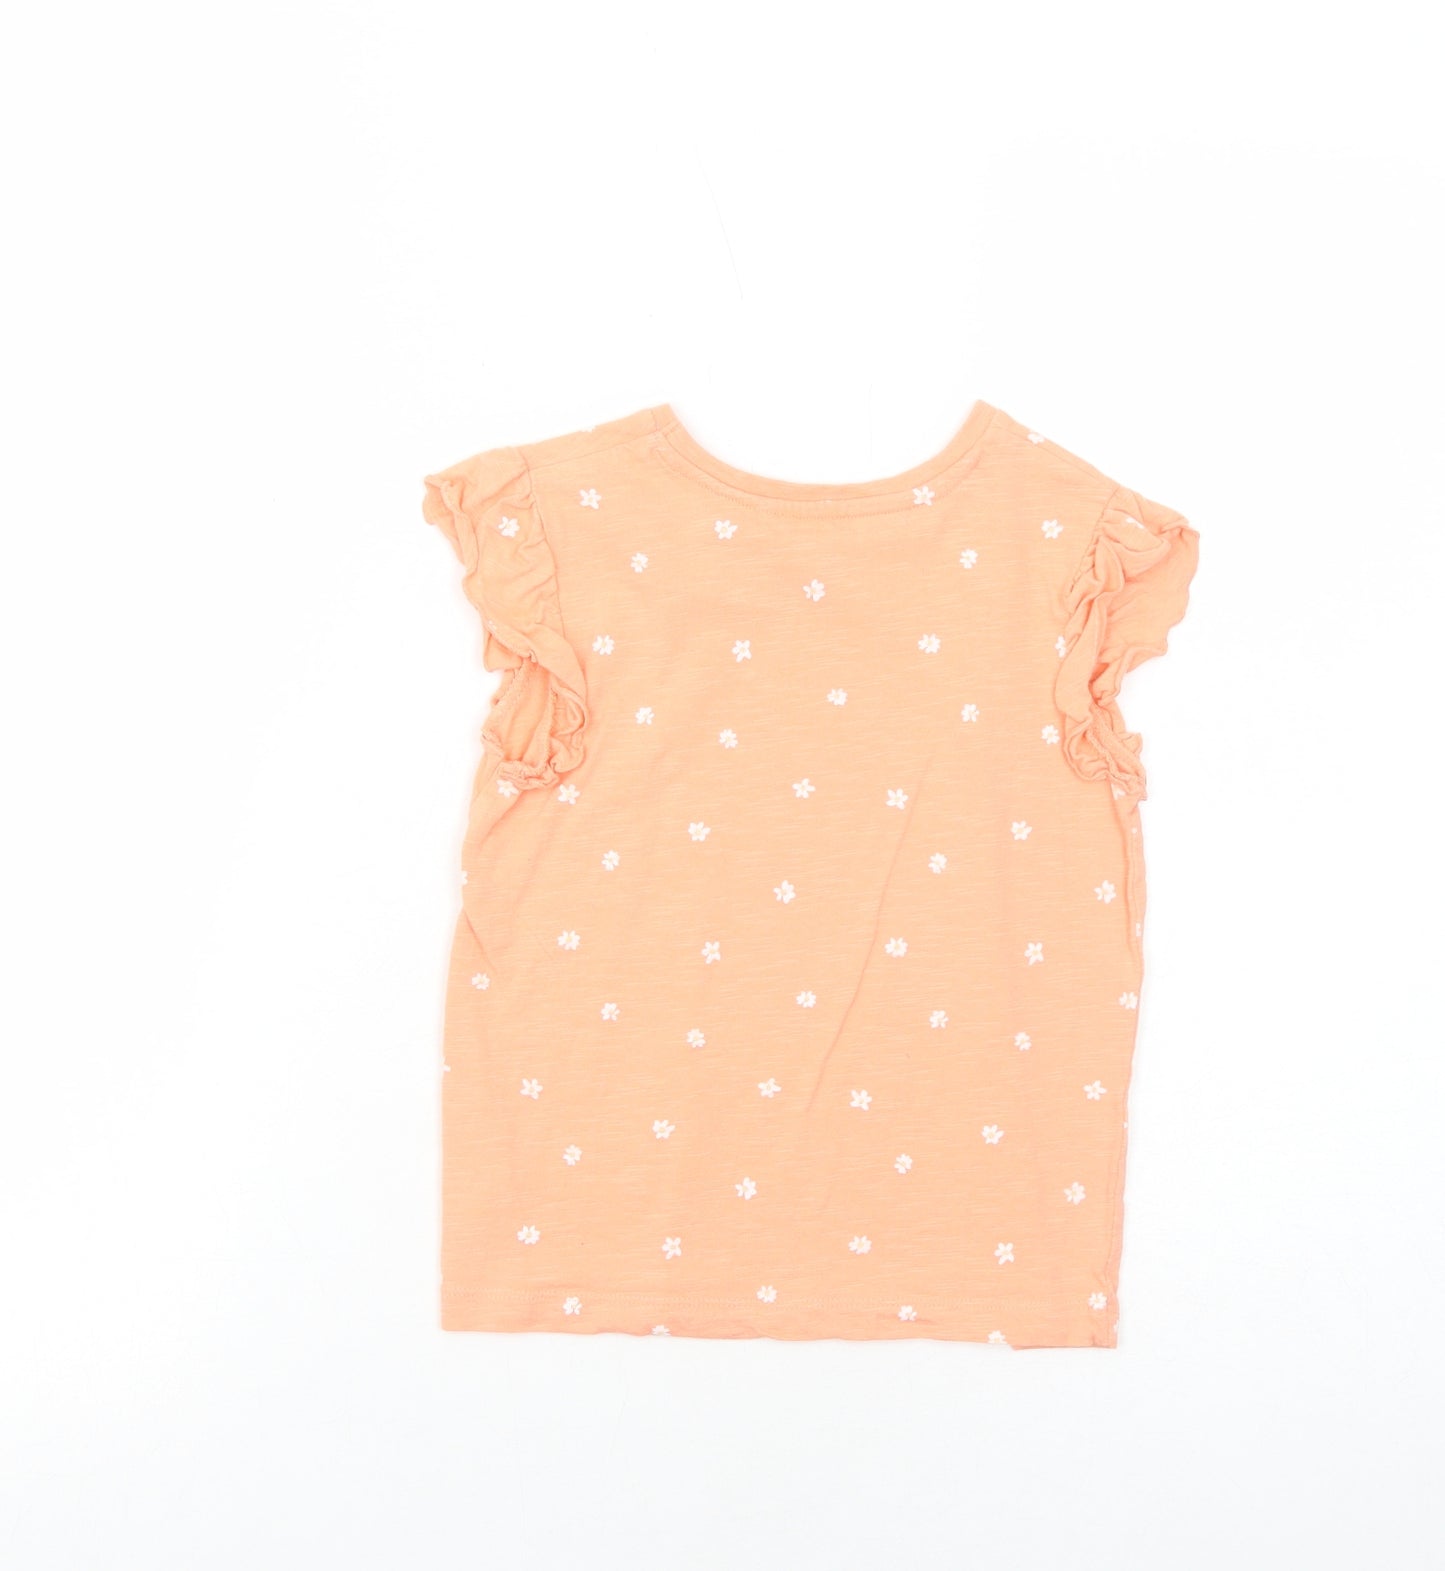 George Girls Orange Floral Cotton Basic T-Shirt Size 5-6 Years Round Neck Pullover